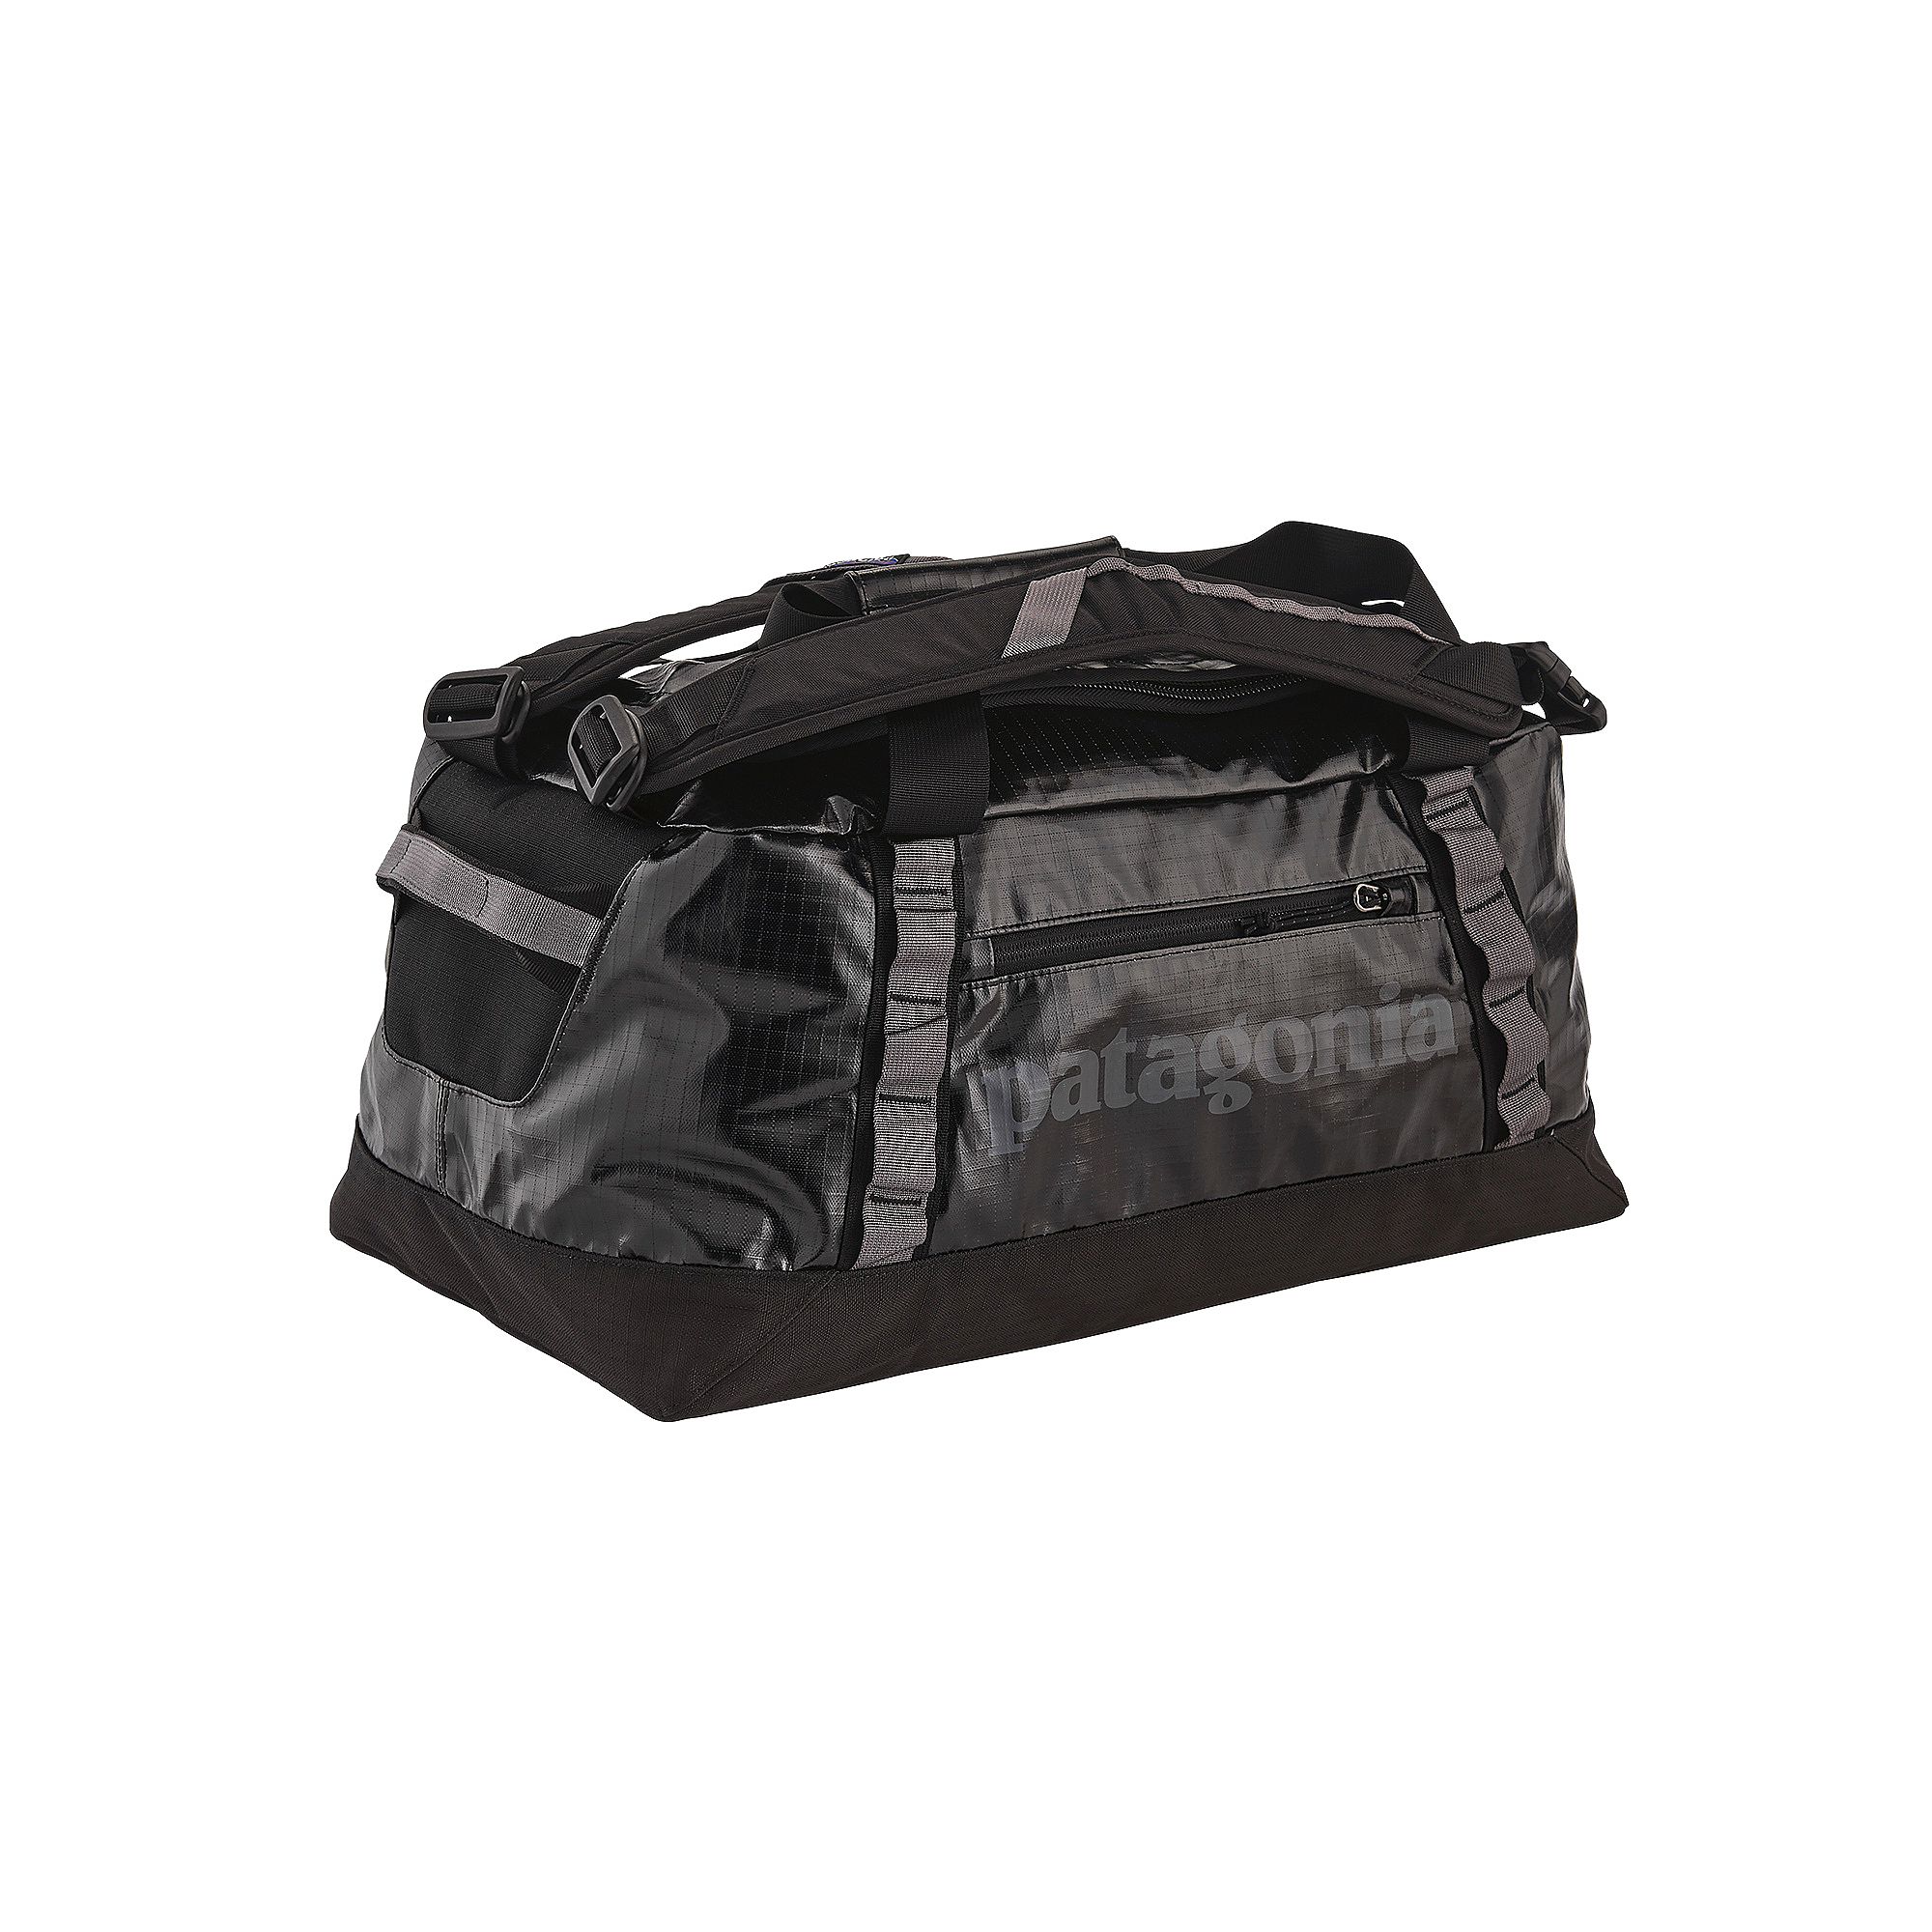 Patagonia Black Hole® Duffel Bag 45L Black.